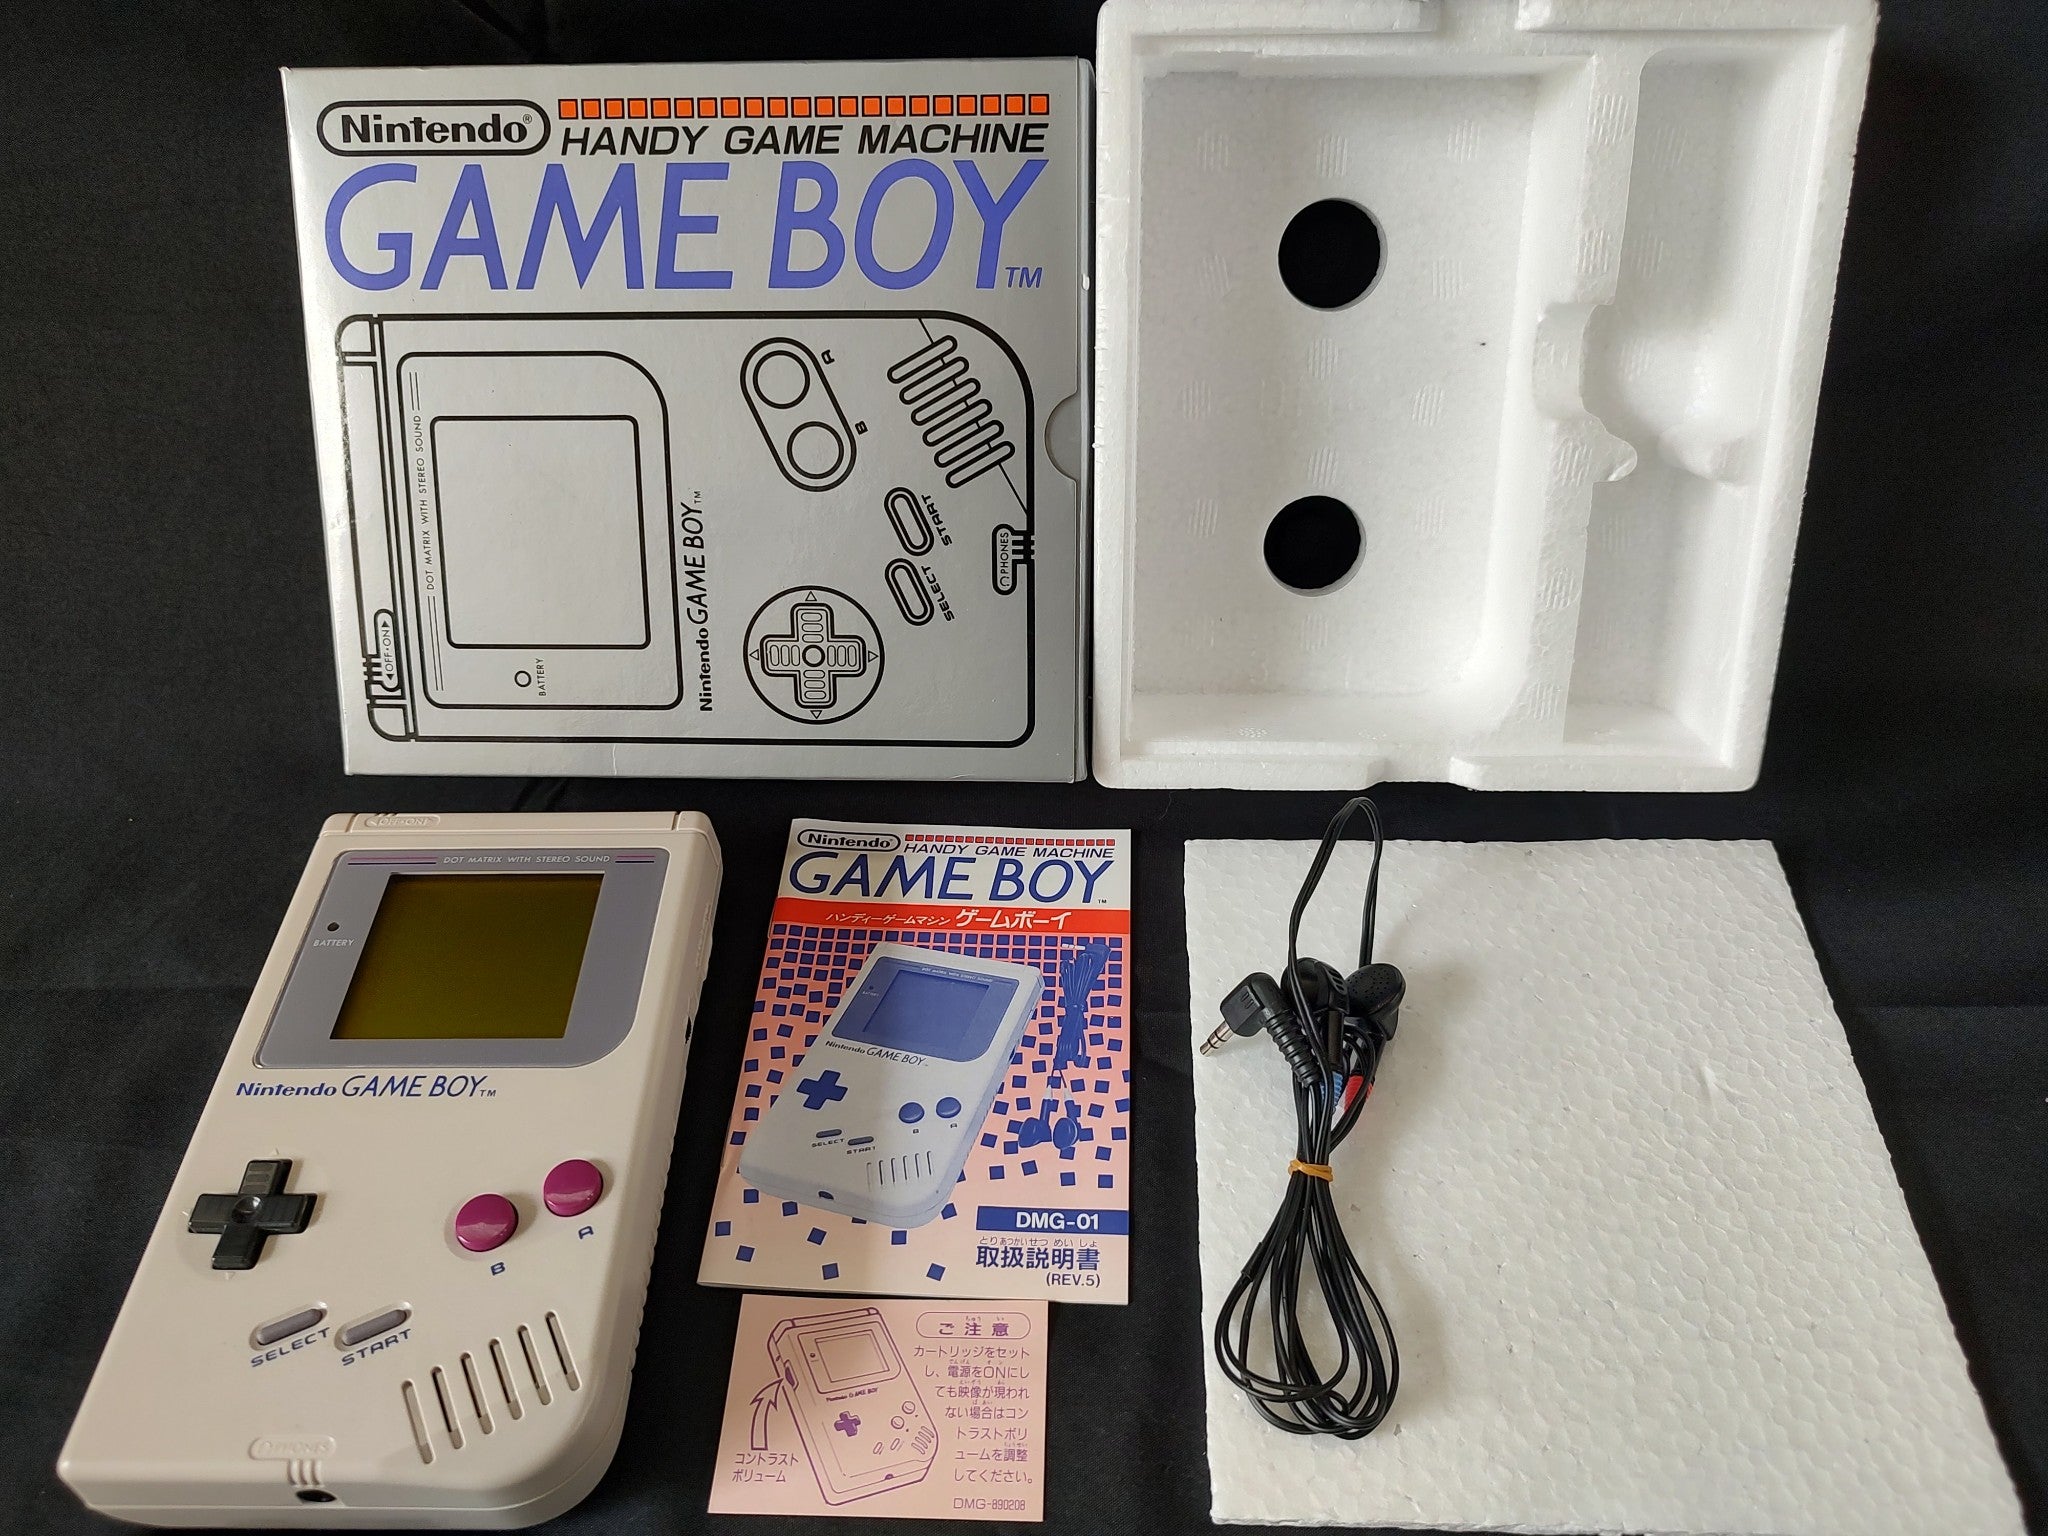 Nintendo Game boy Gray Color Console (DMG-001),Manual and Box set